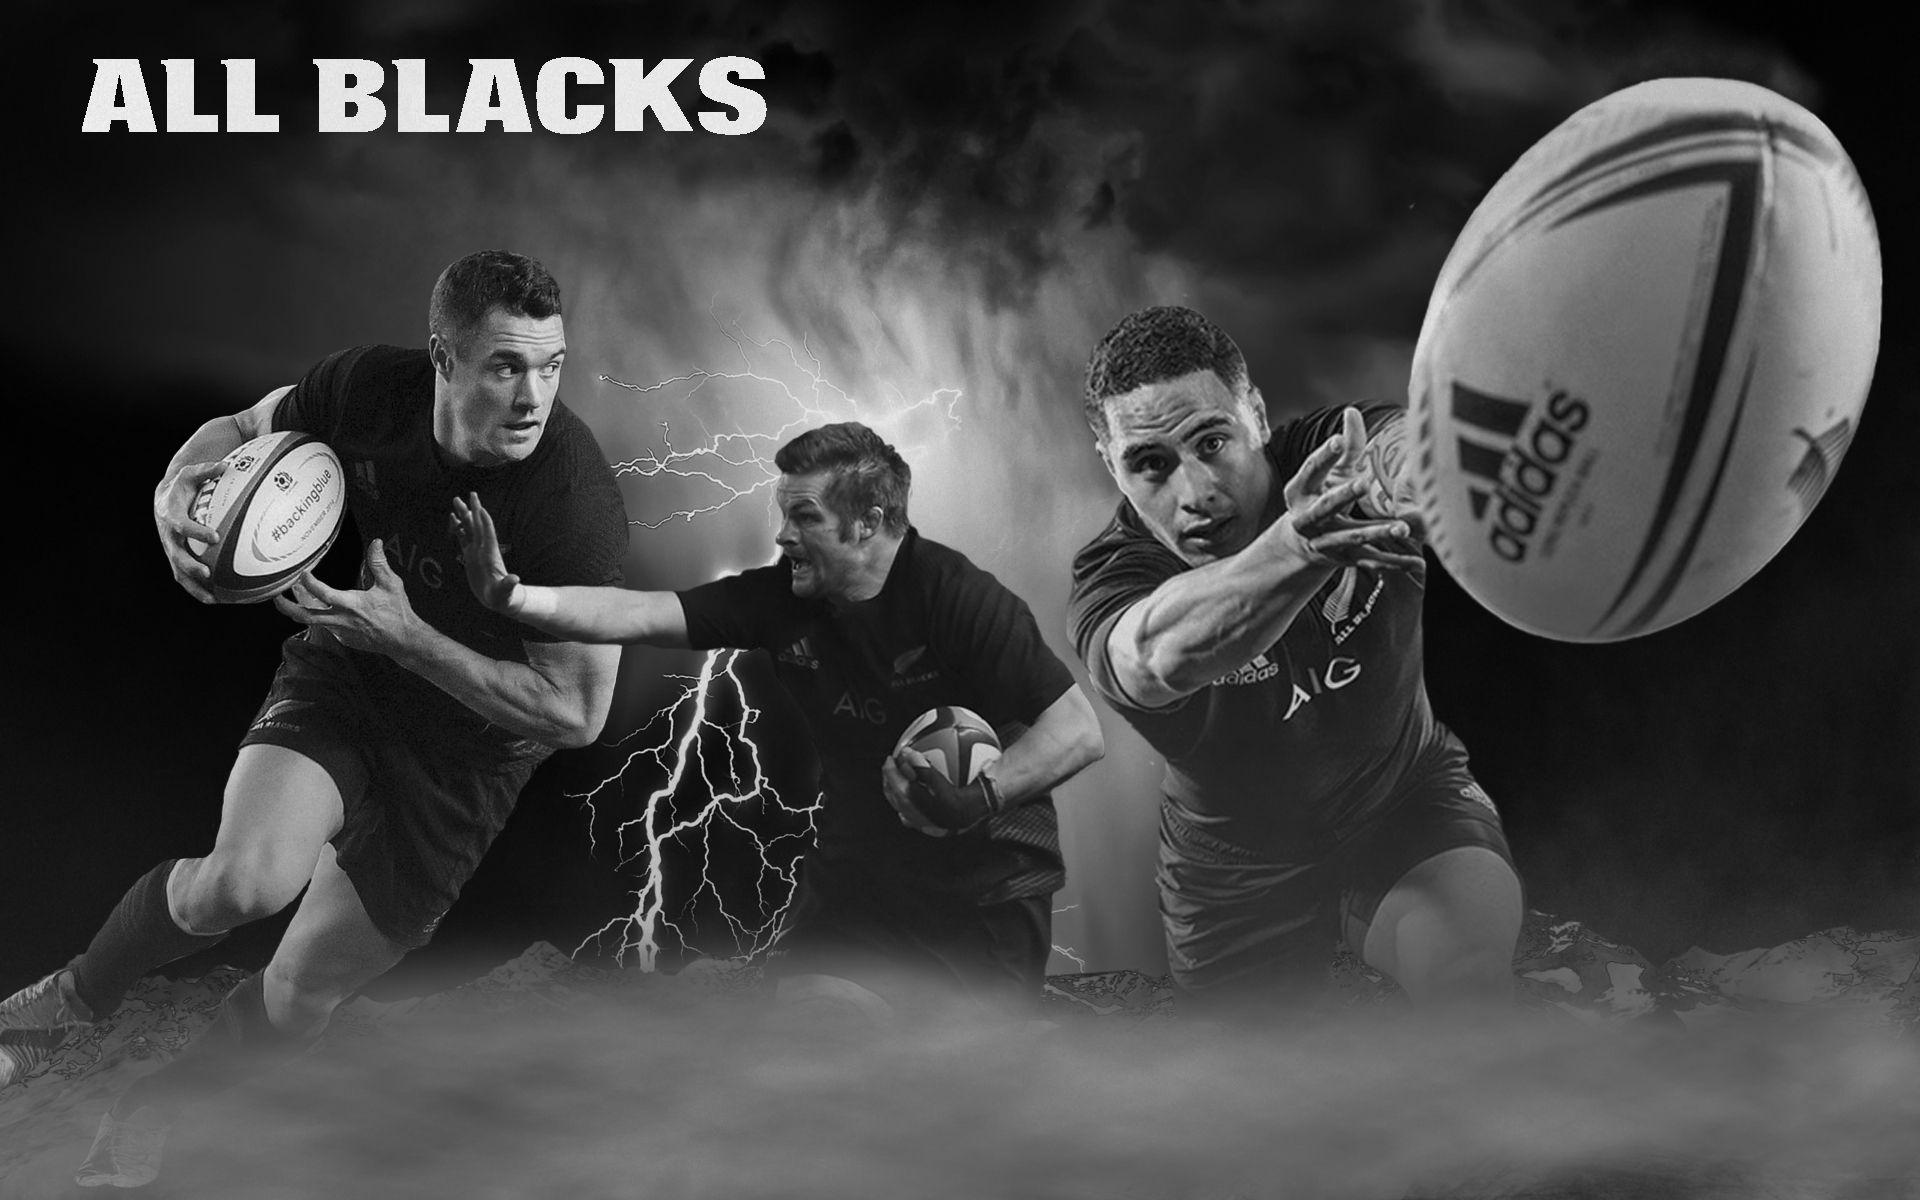 All Black Rugby Wallpaper Dsh 251 Full HD High Quality All Blacks